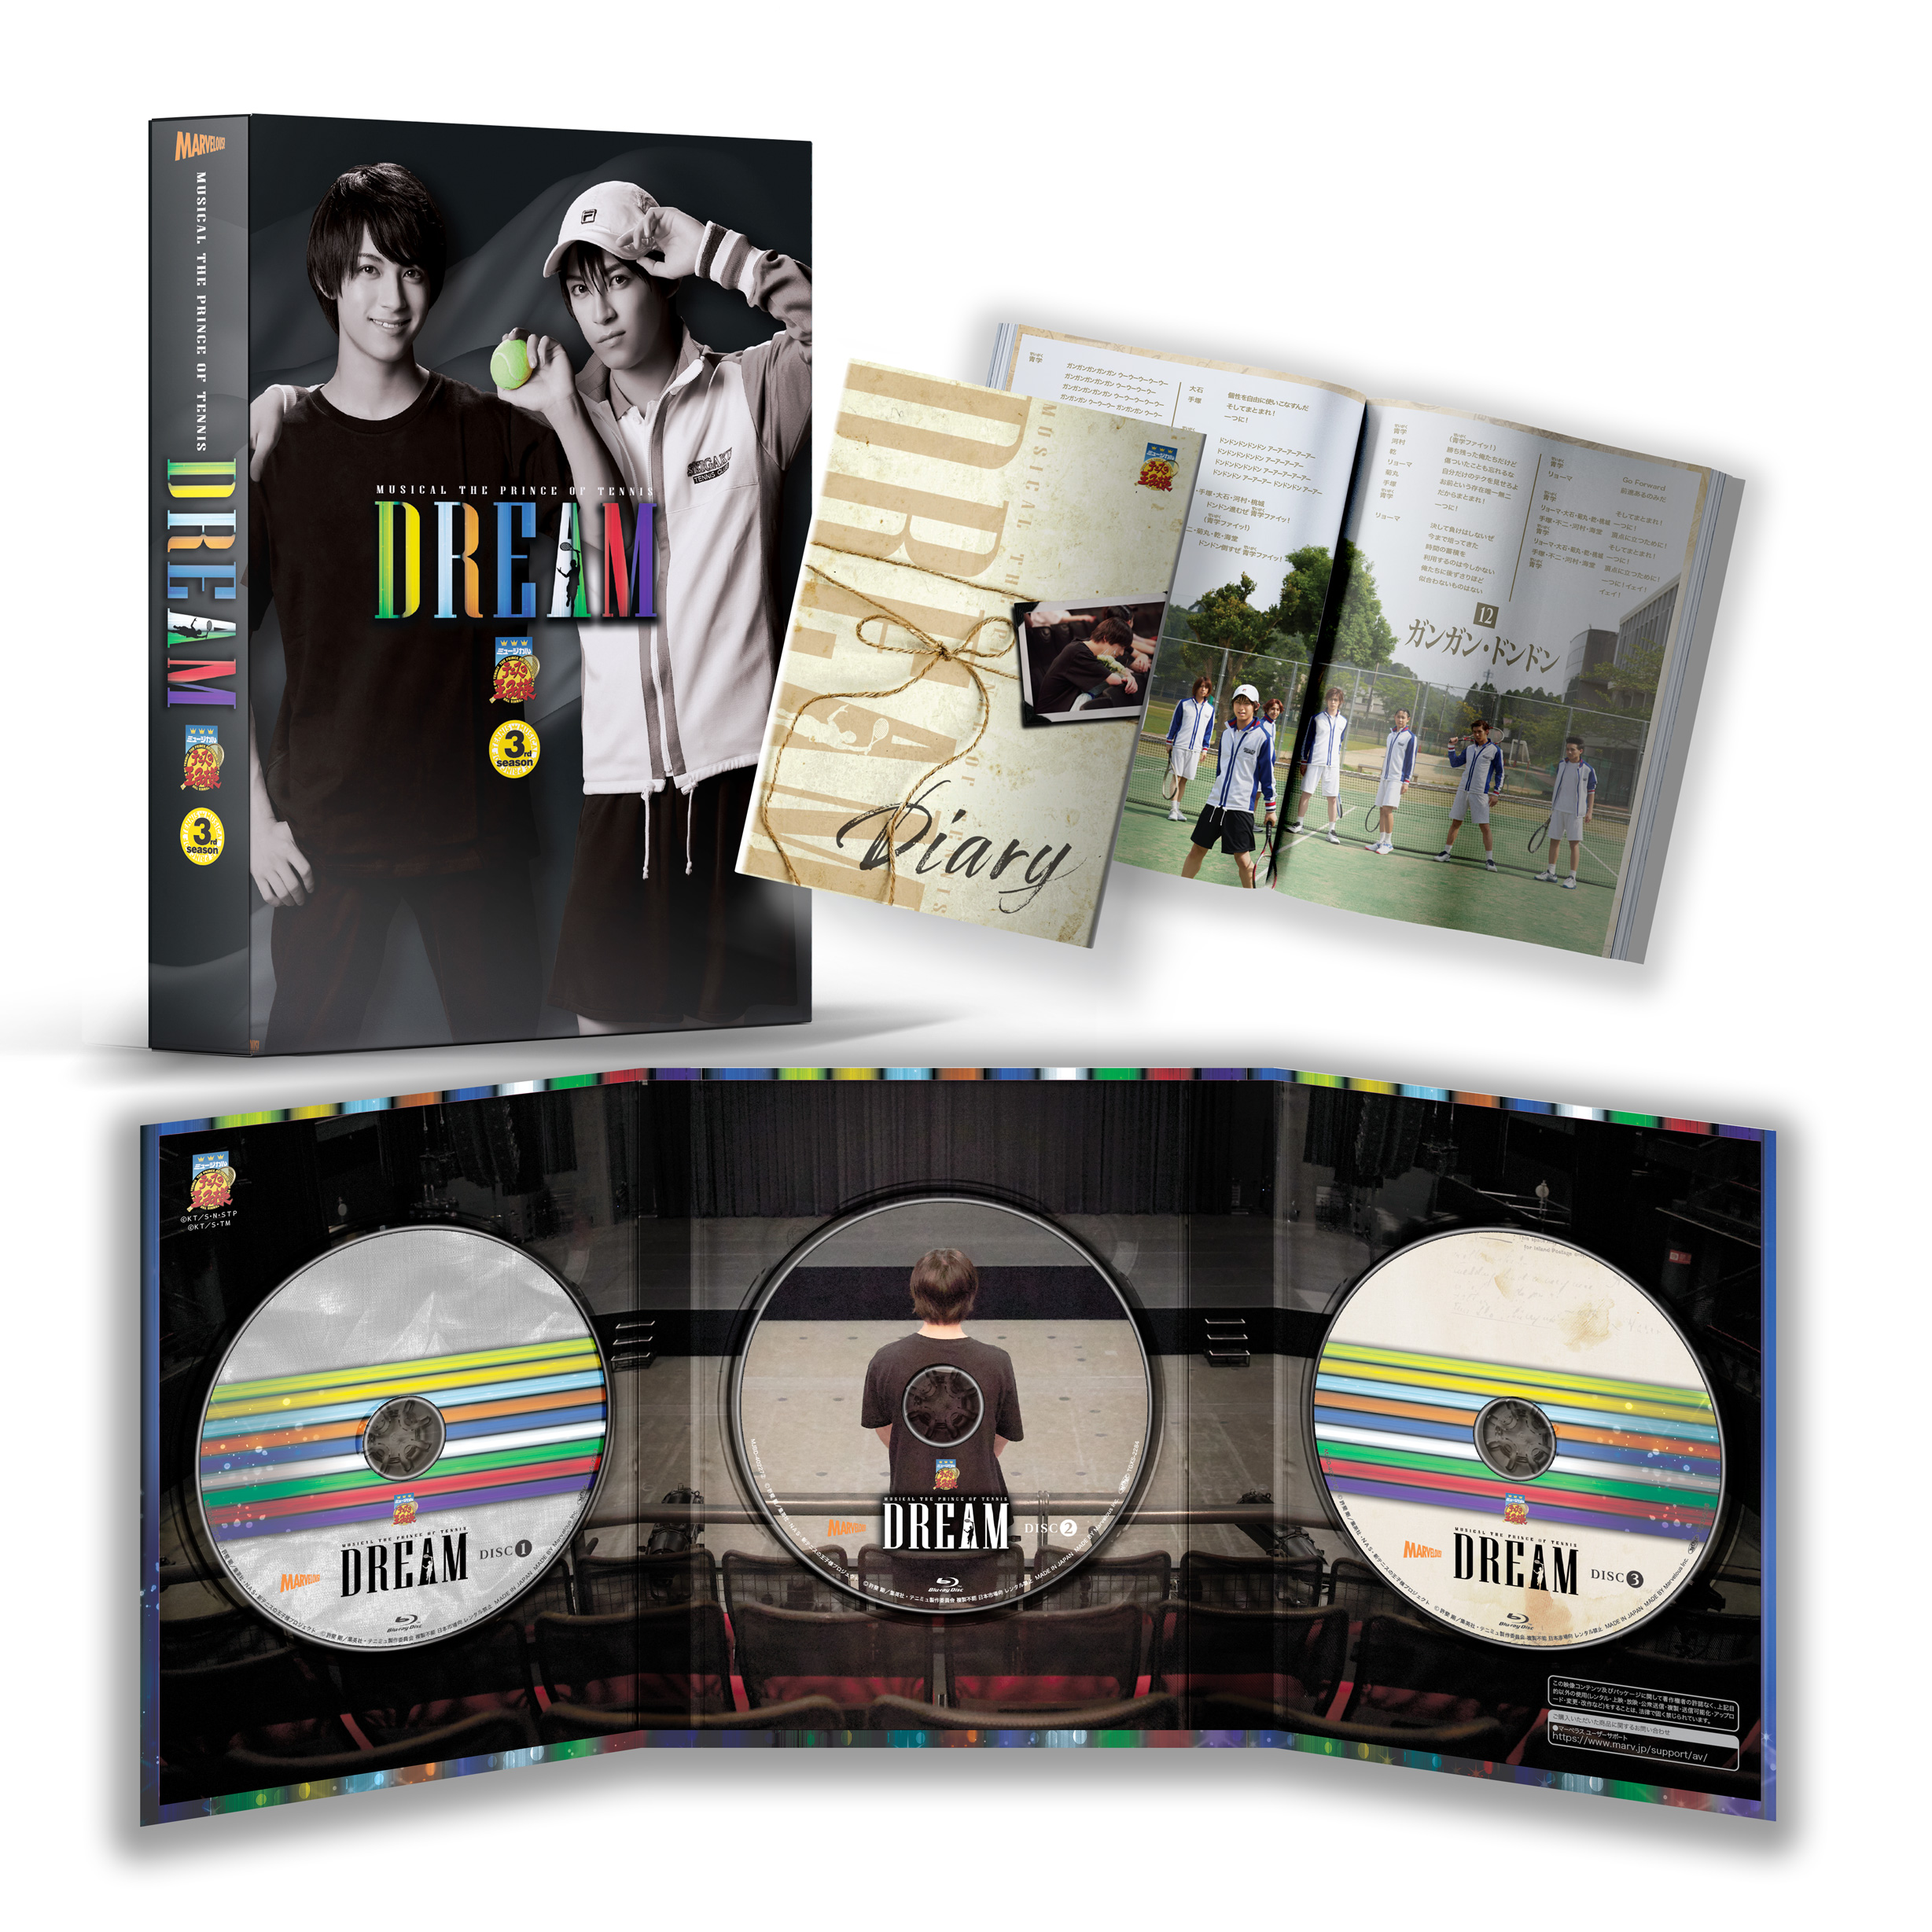 DVD】ミュージカル『テニスの王子様』Dream | ディスコグラフィー | ミュージカル『テニスの王子様』『新テニスの王子様』公式サイト